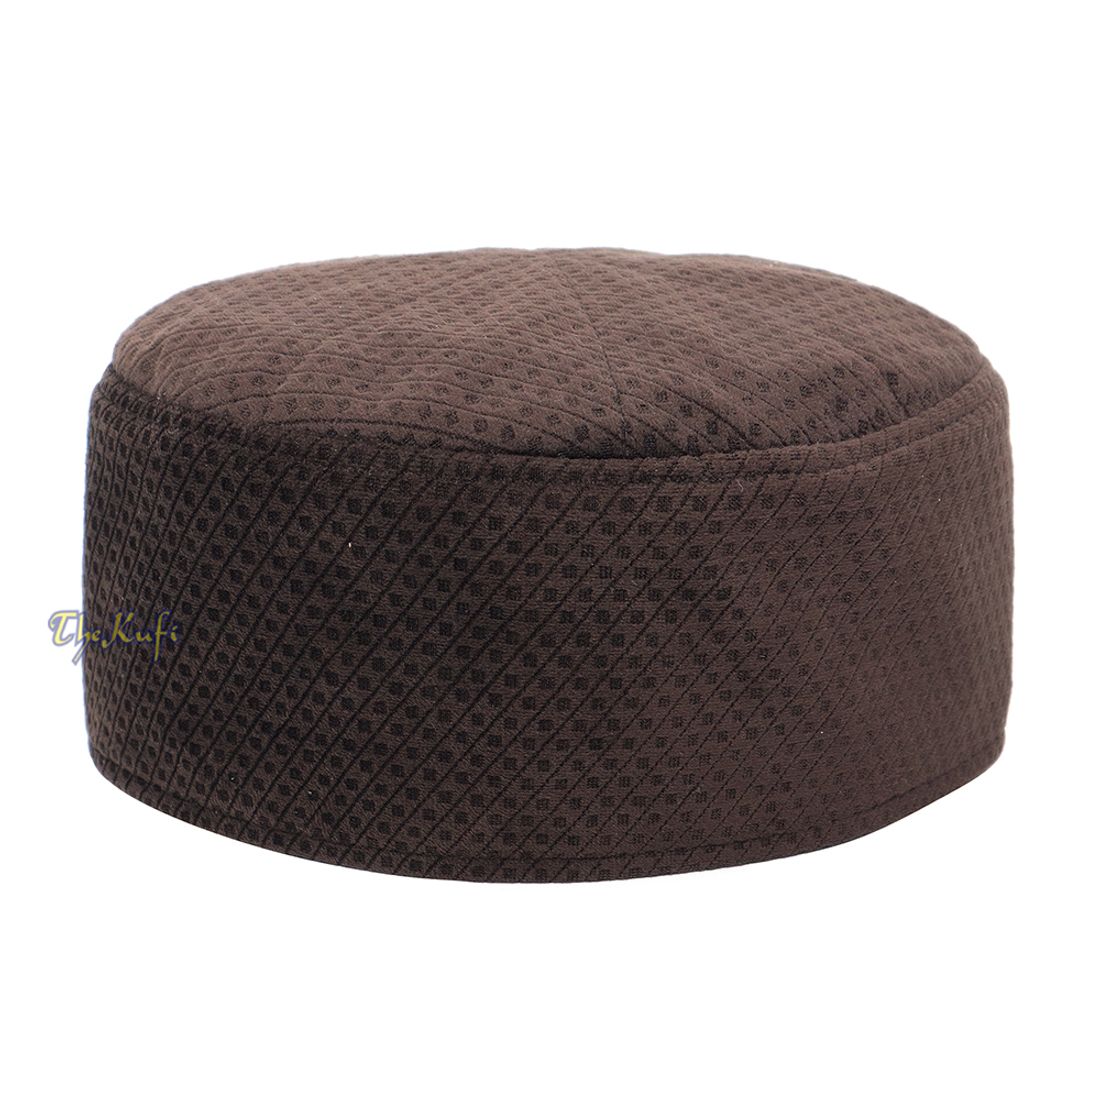 Dark Brown Smooth Velvet Semi-rigid Kufi Hat Turkish Takke Prayer Cap